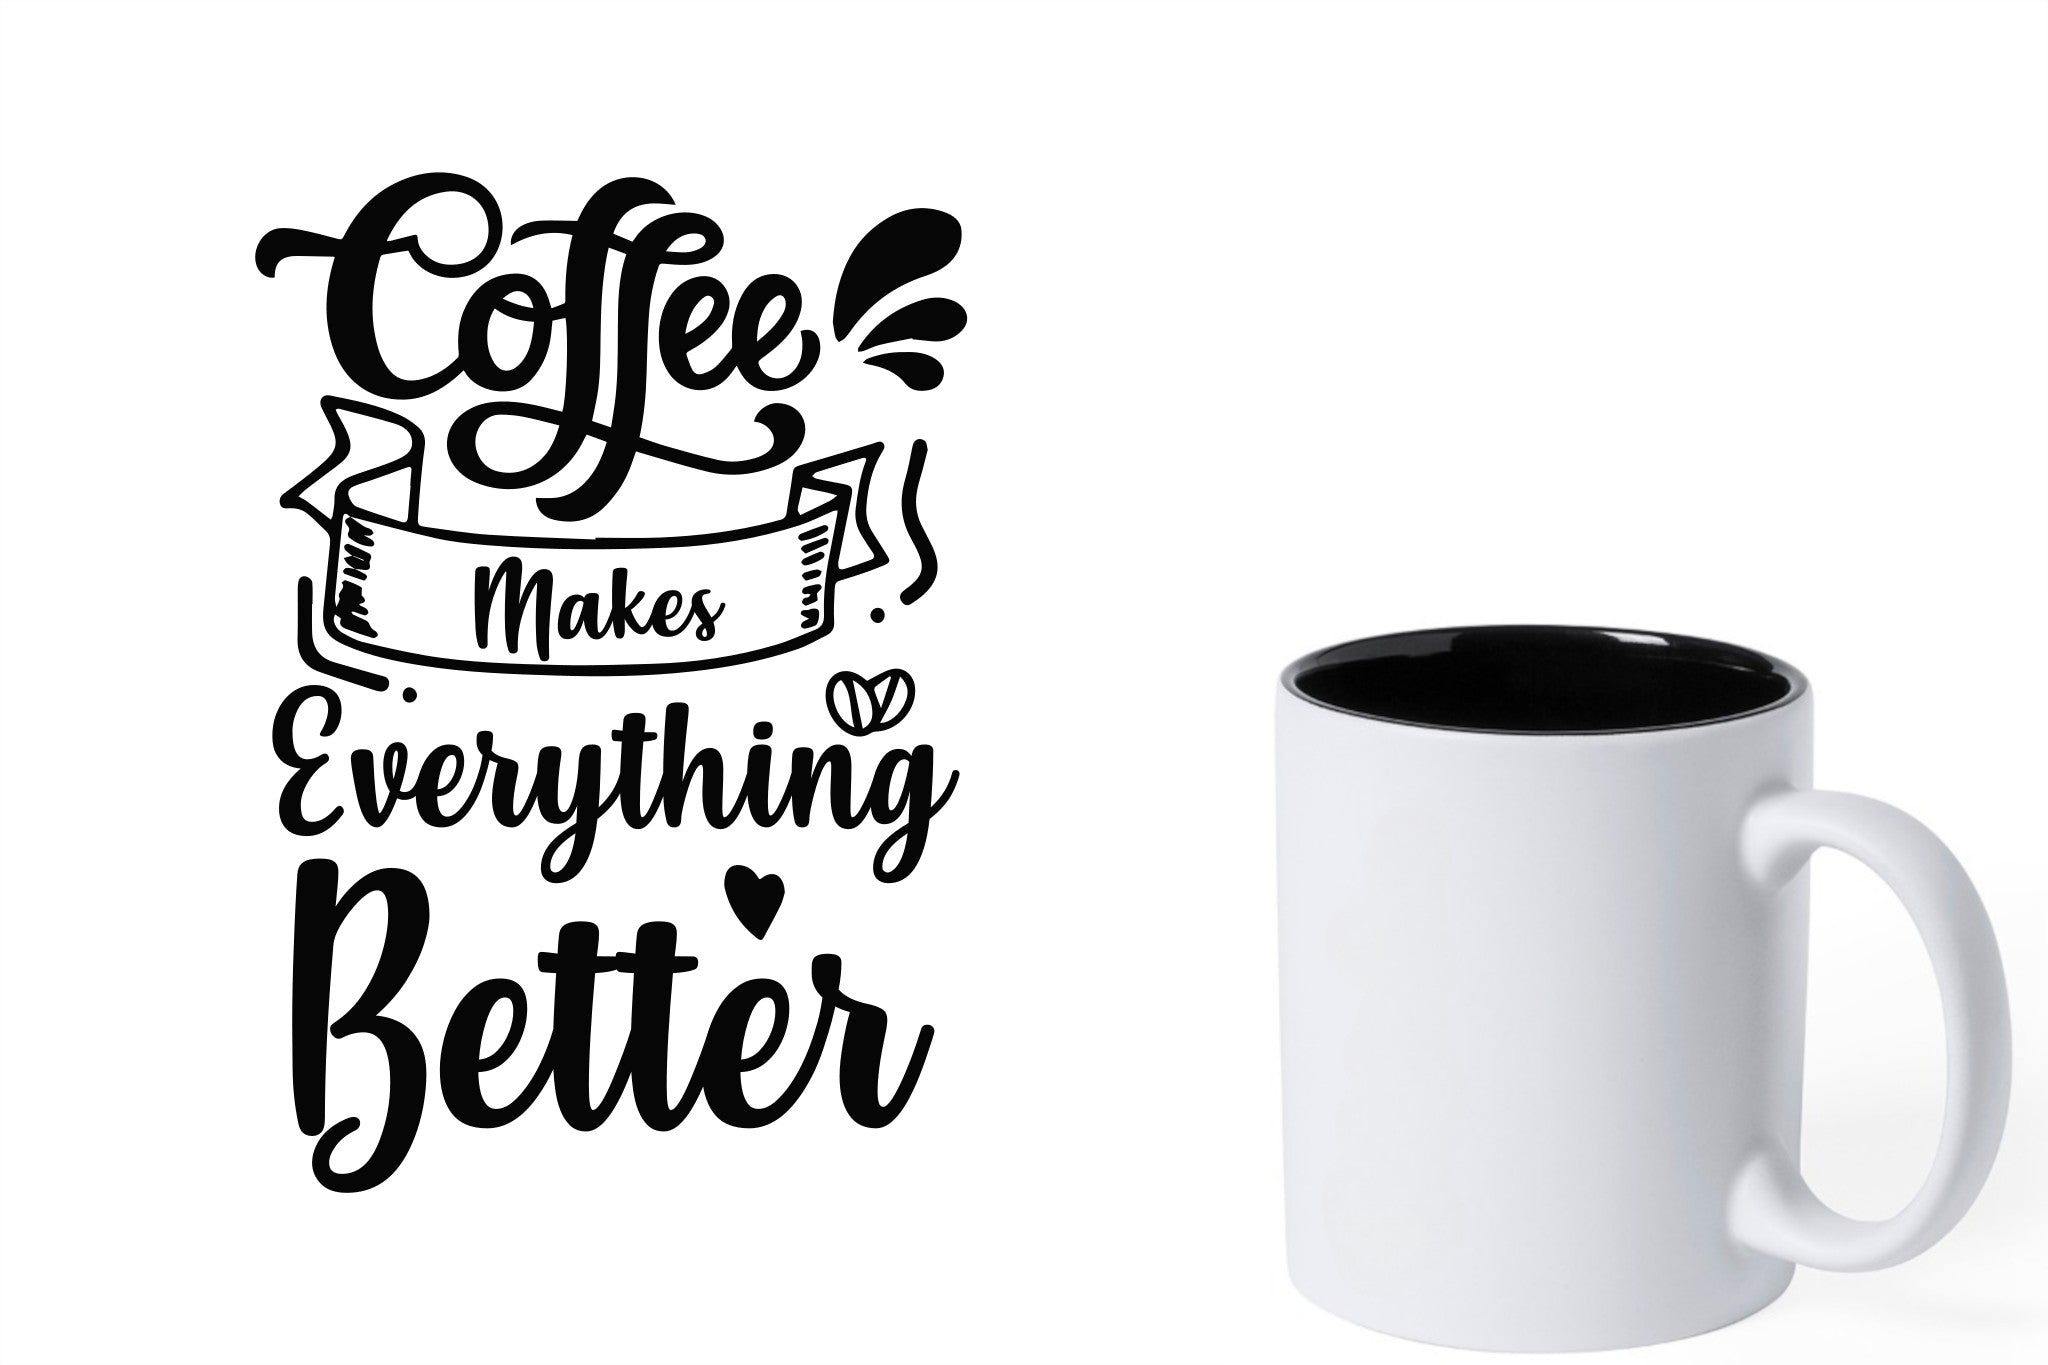 Witte keramische mok met zwarte gravure  'Coffee makes everything better'.